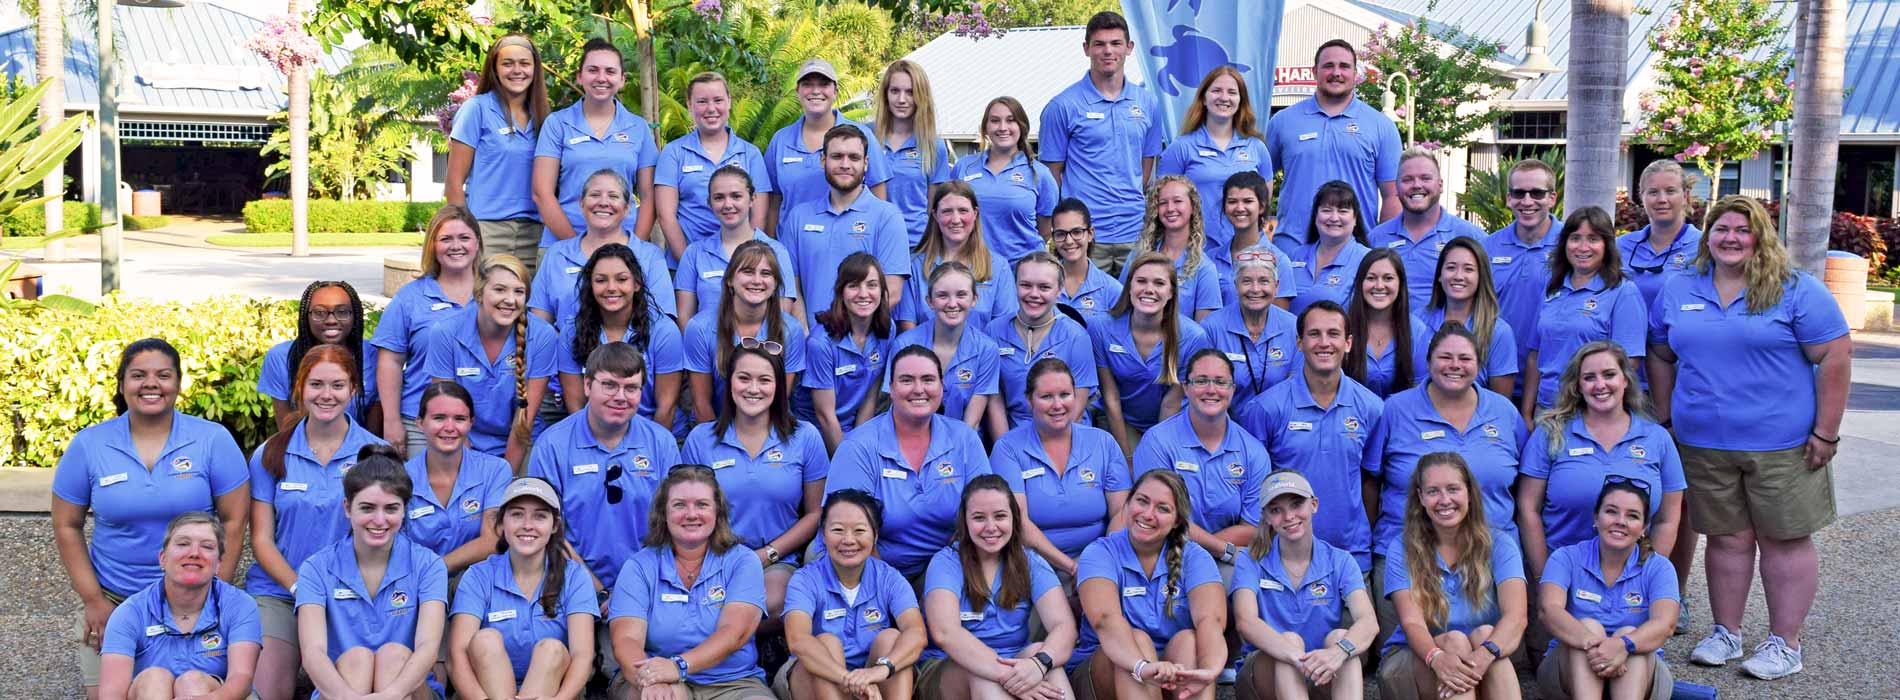 2019 SeaWorld Orlando Camp Counselors